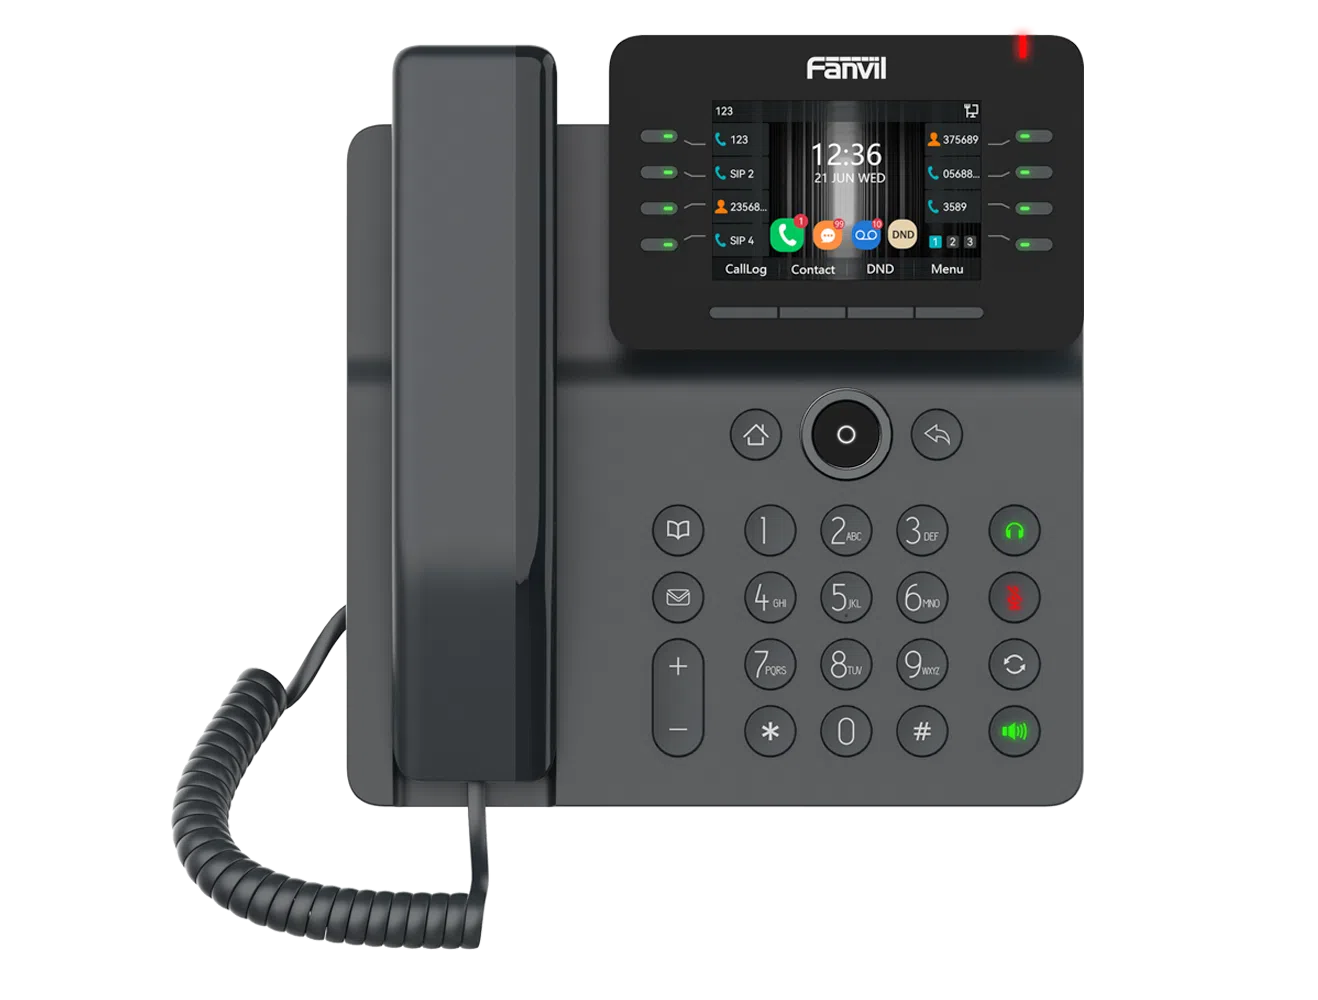 Can you provide the SKU for the fanvil v64 Enterprise Phone?